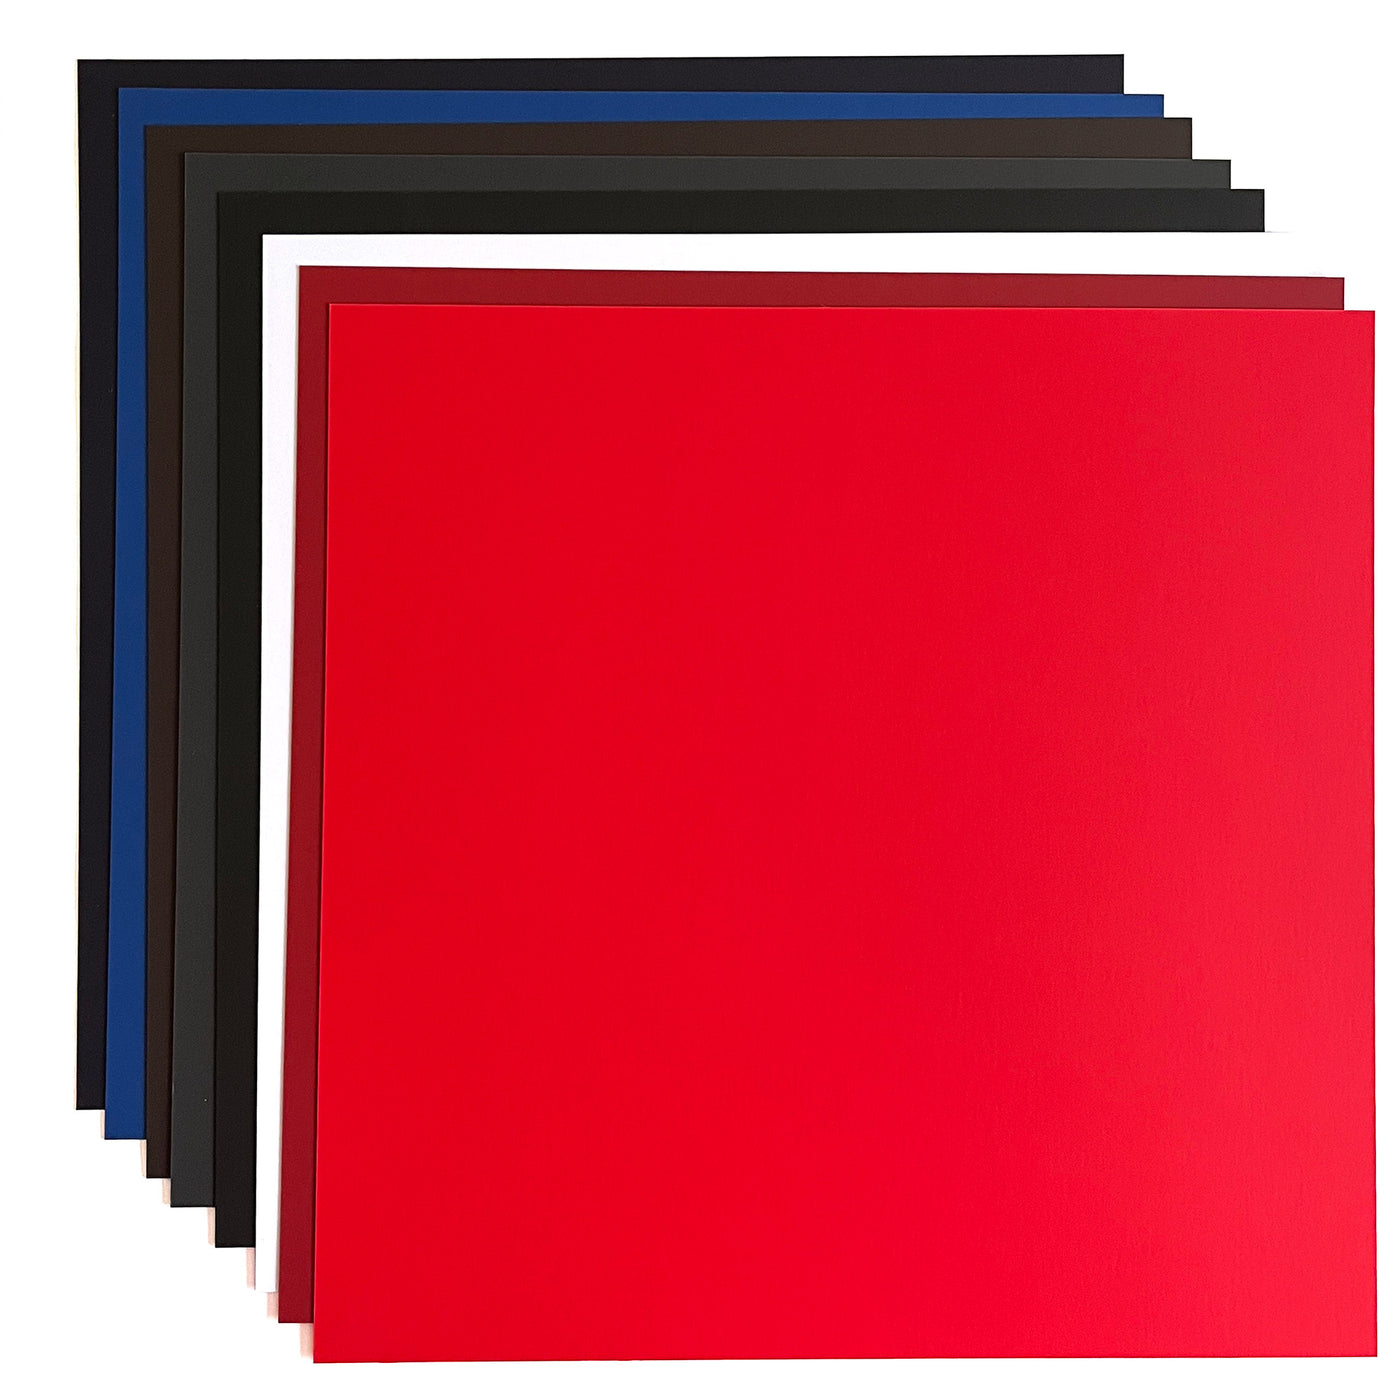 Plike Plastic-Like Cardstock Complete Variety Pack - 8 Pack